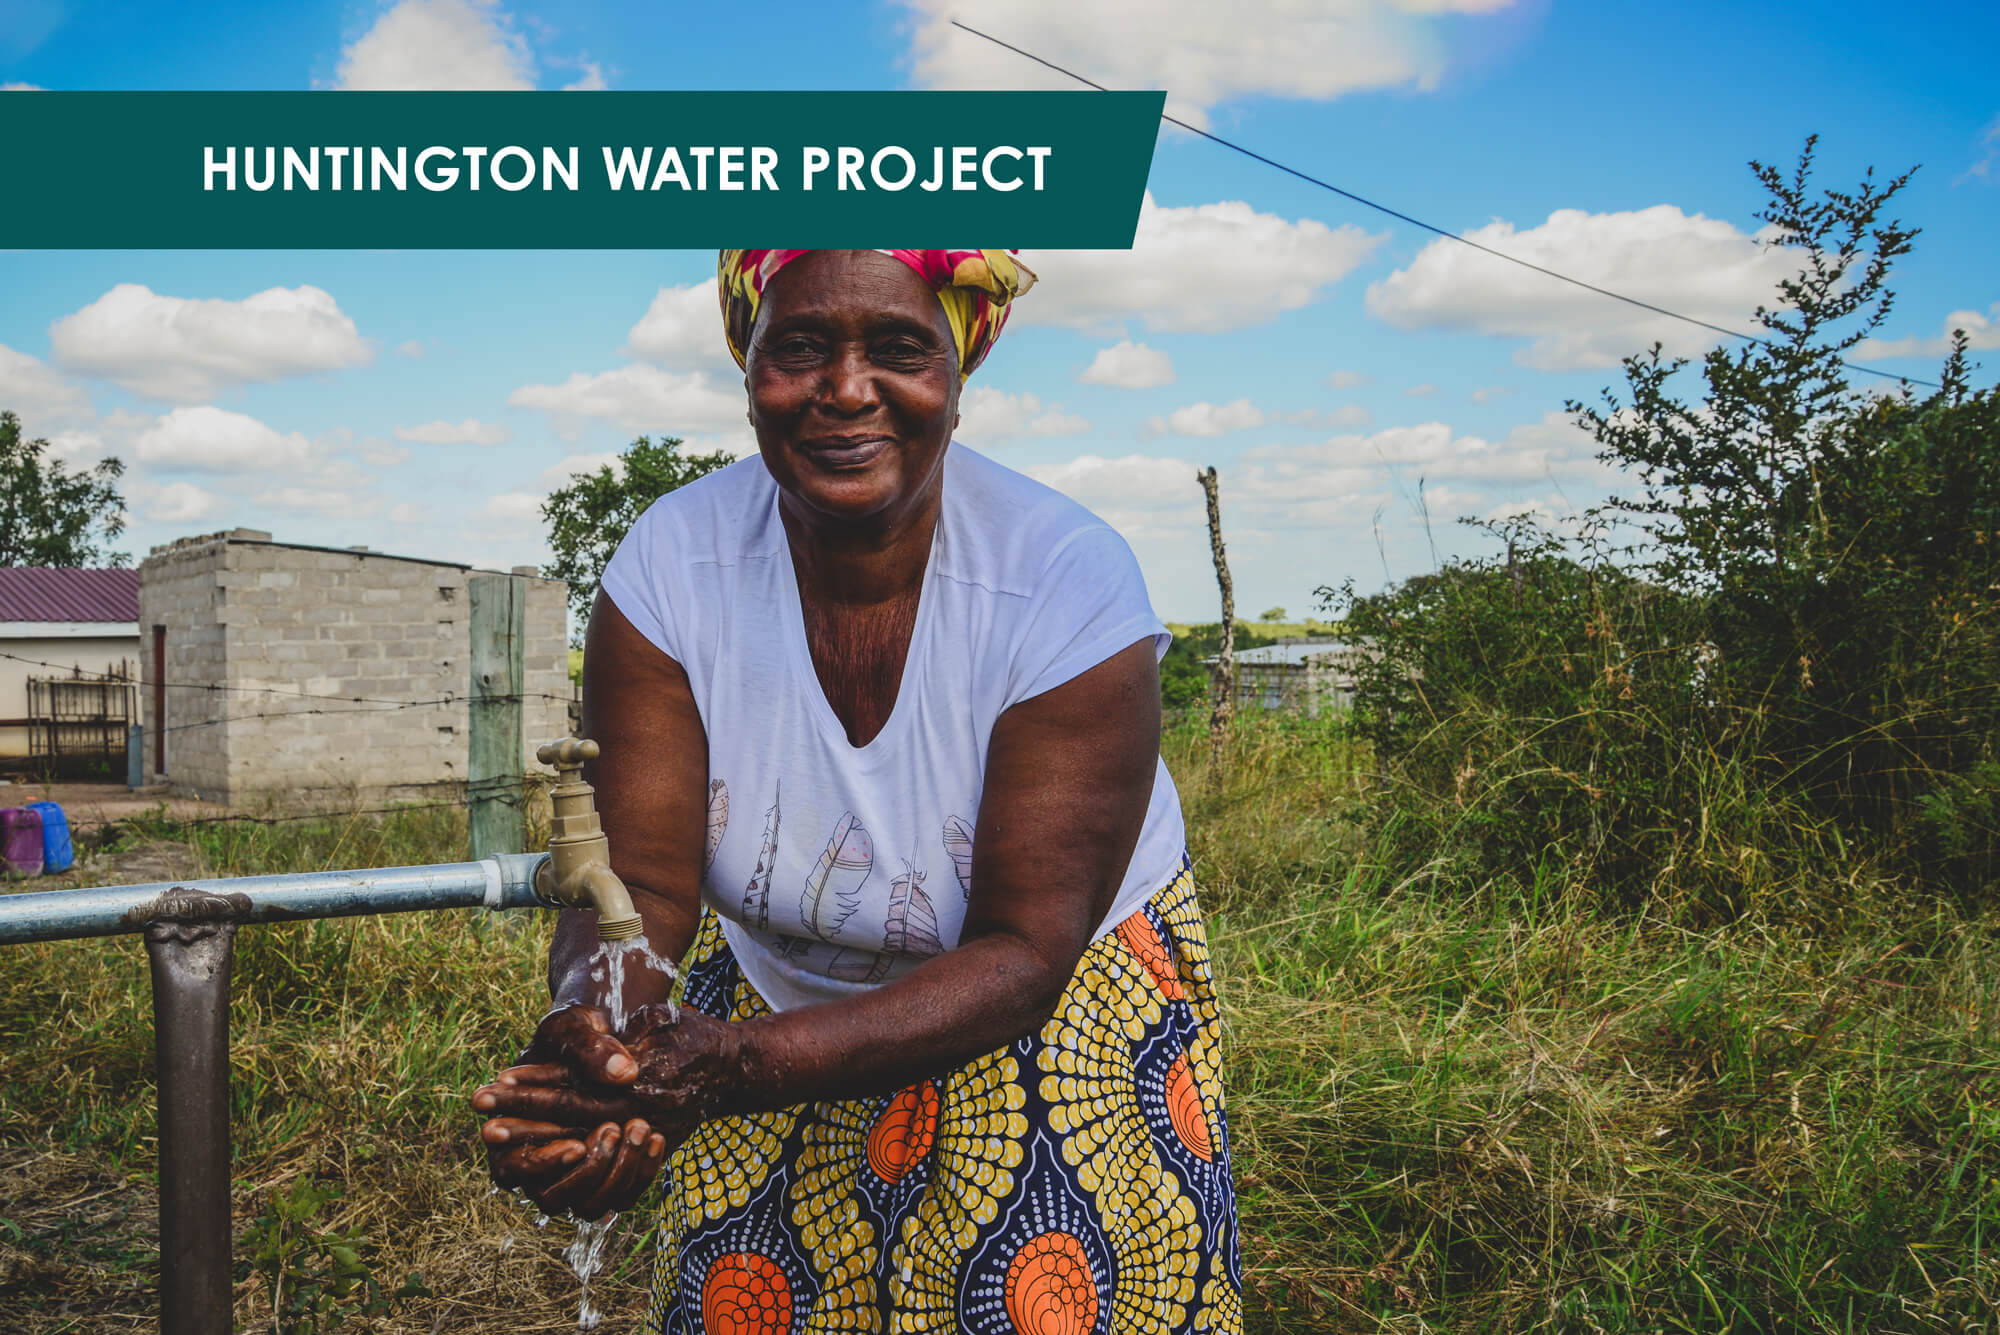 Huntington Water Project – Huntington Village